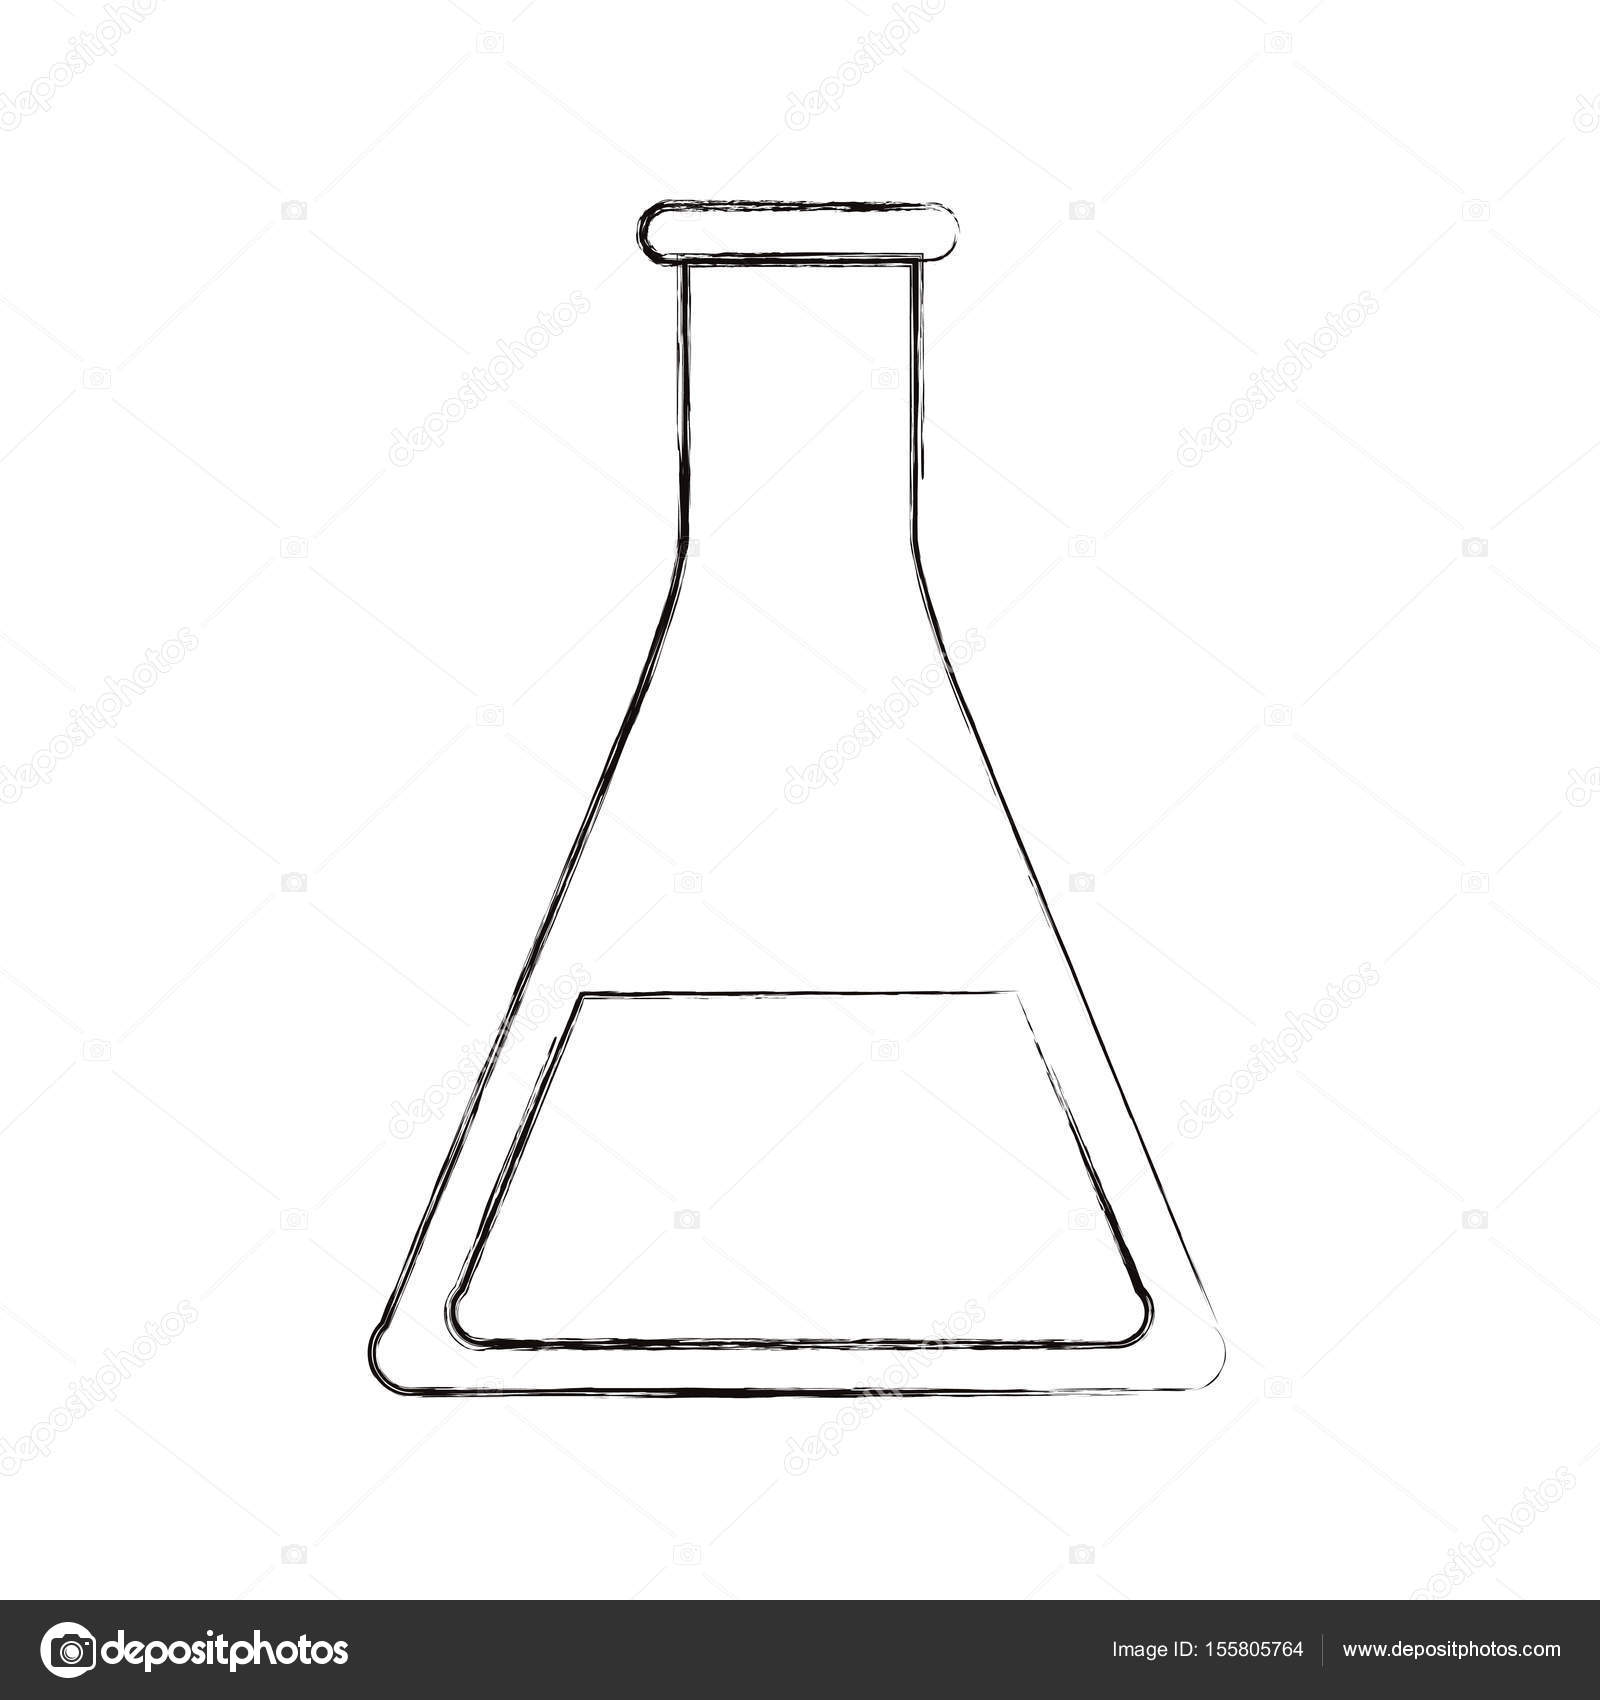 Graduated glass measuring laboratory beaker Vector Image